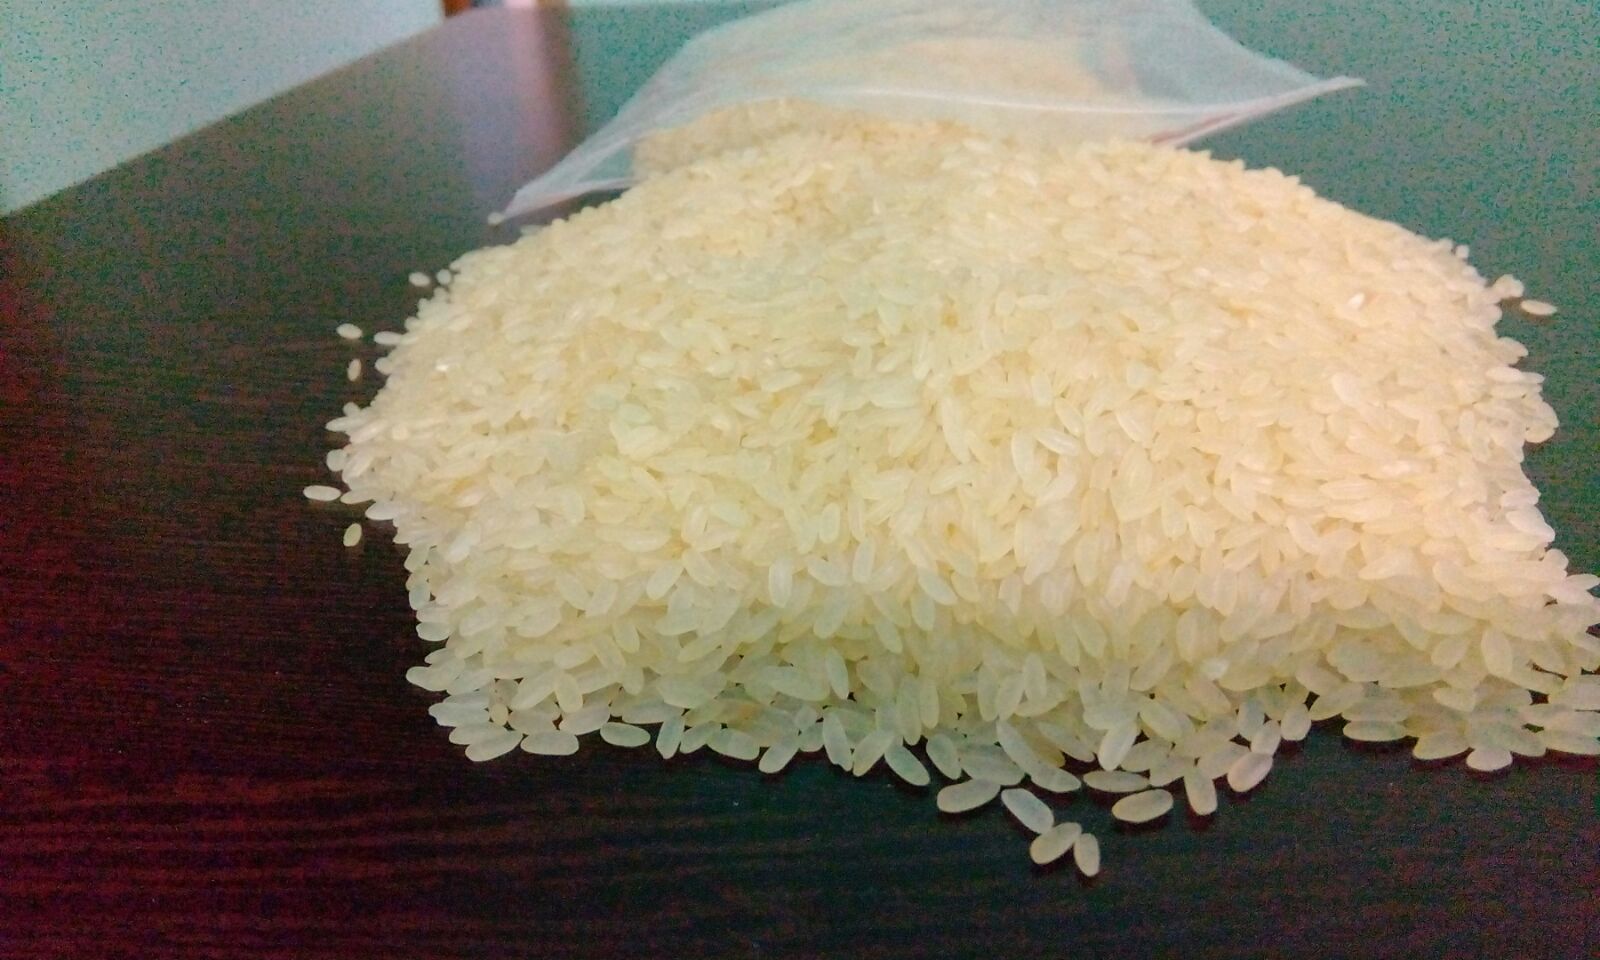 India parboiled rice IR64